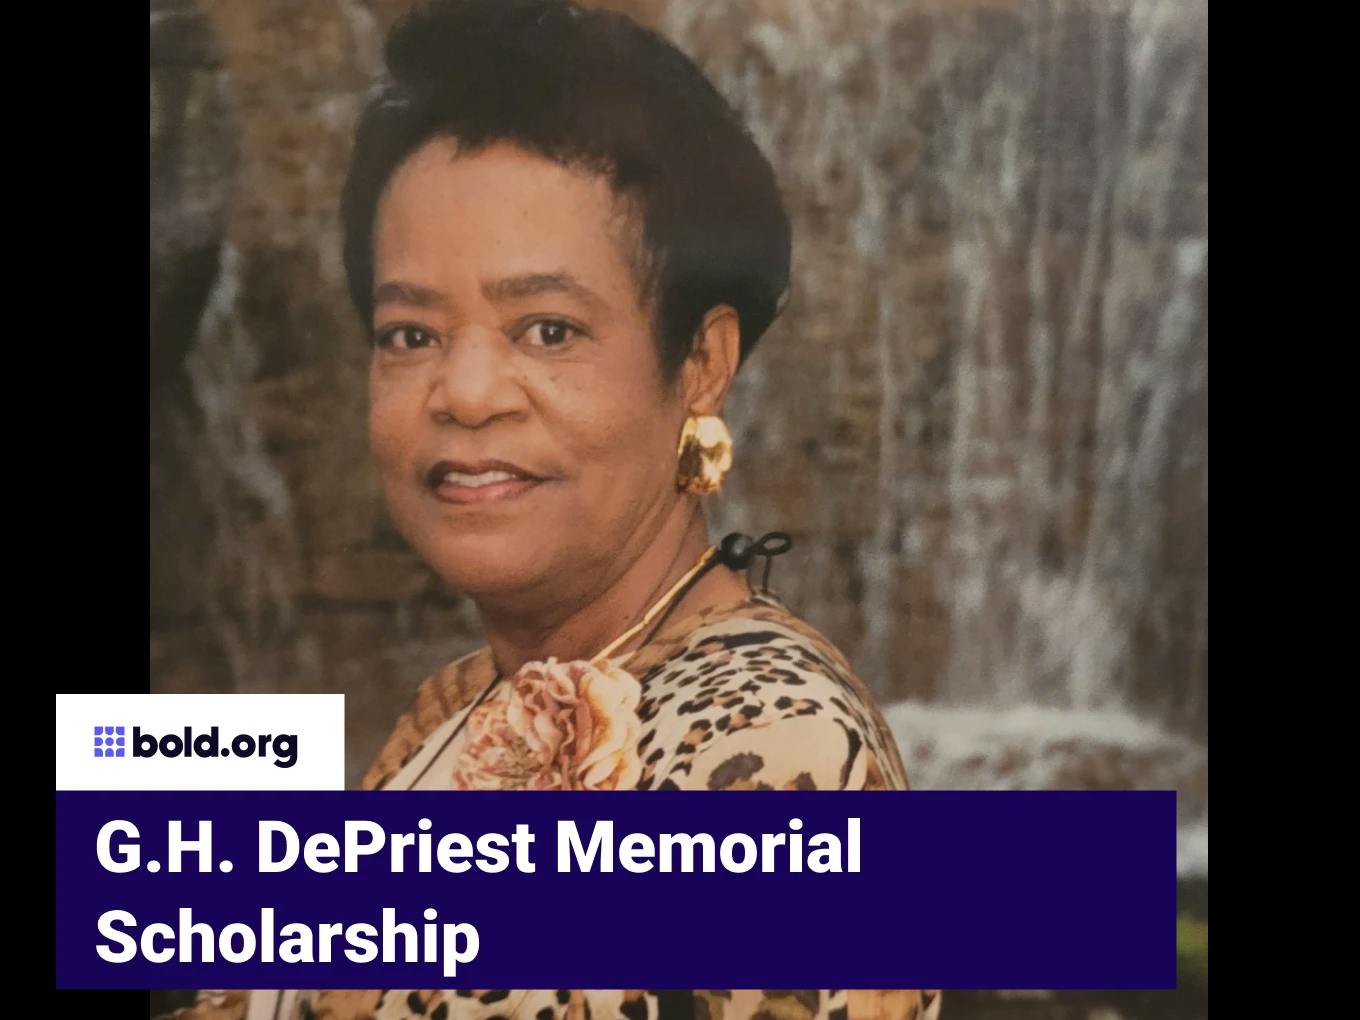 G.H. DePriest Memorial Scholarship